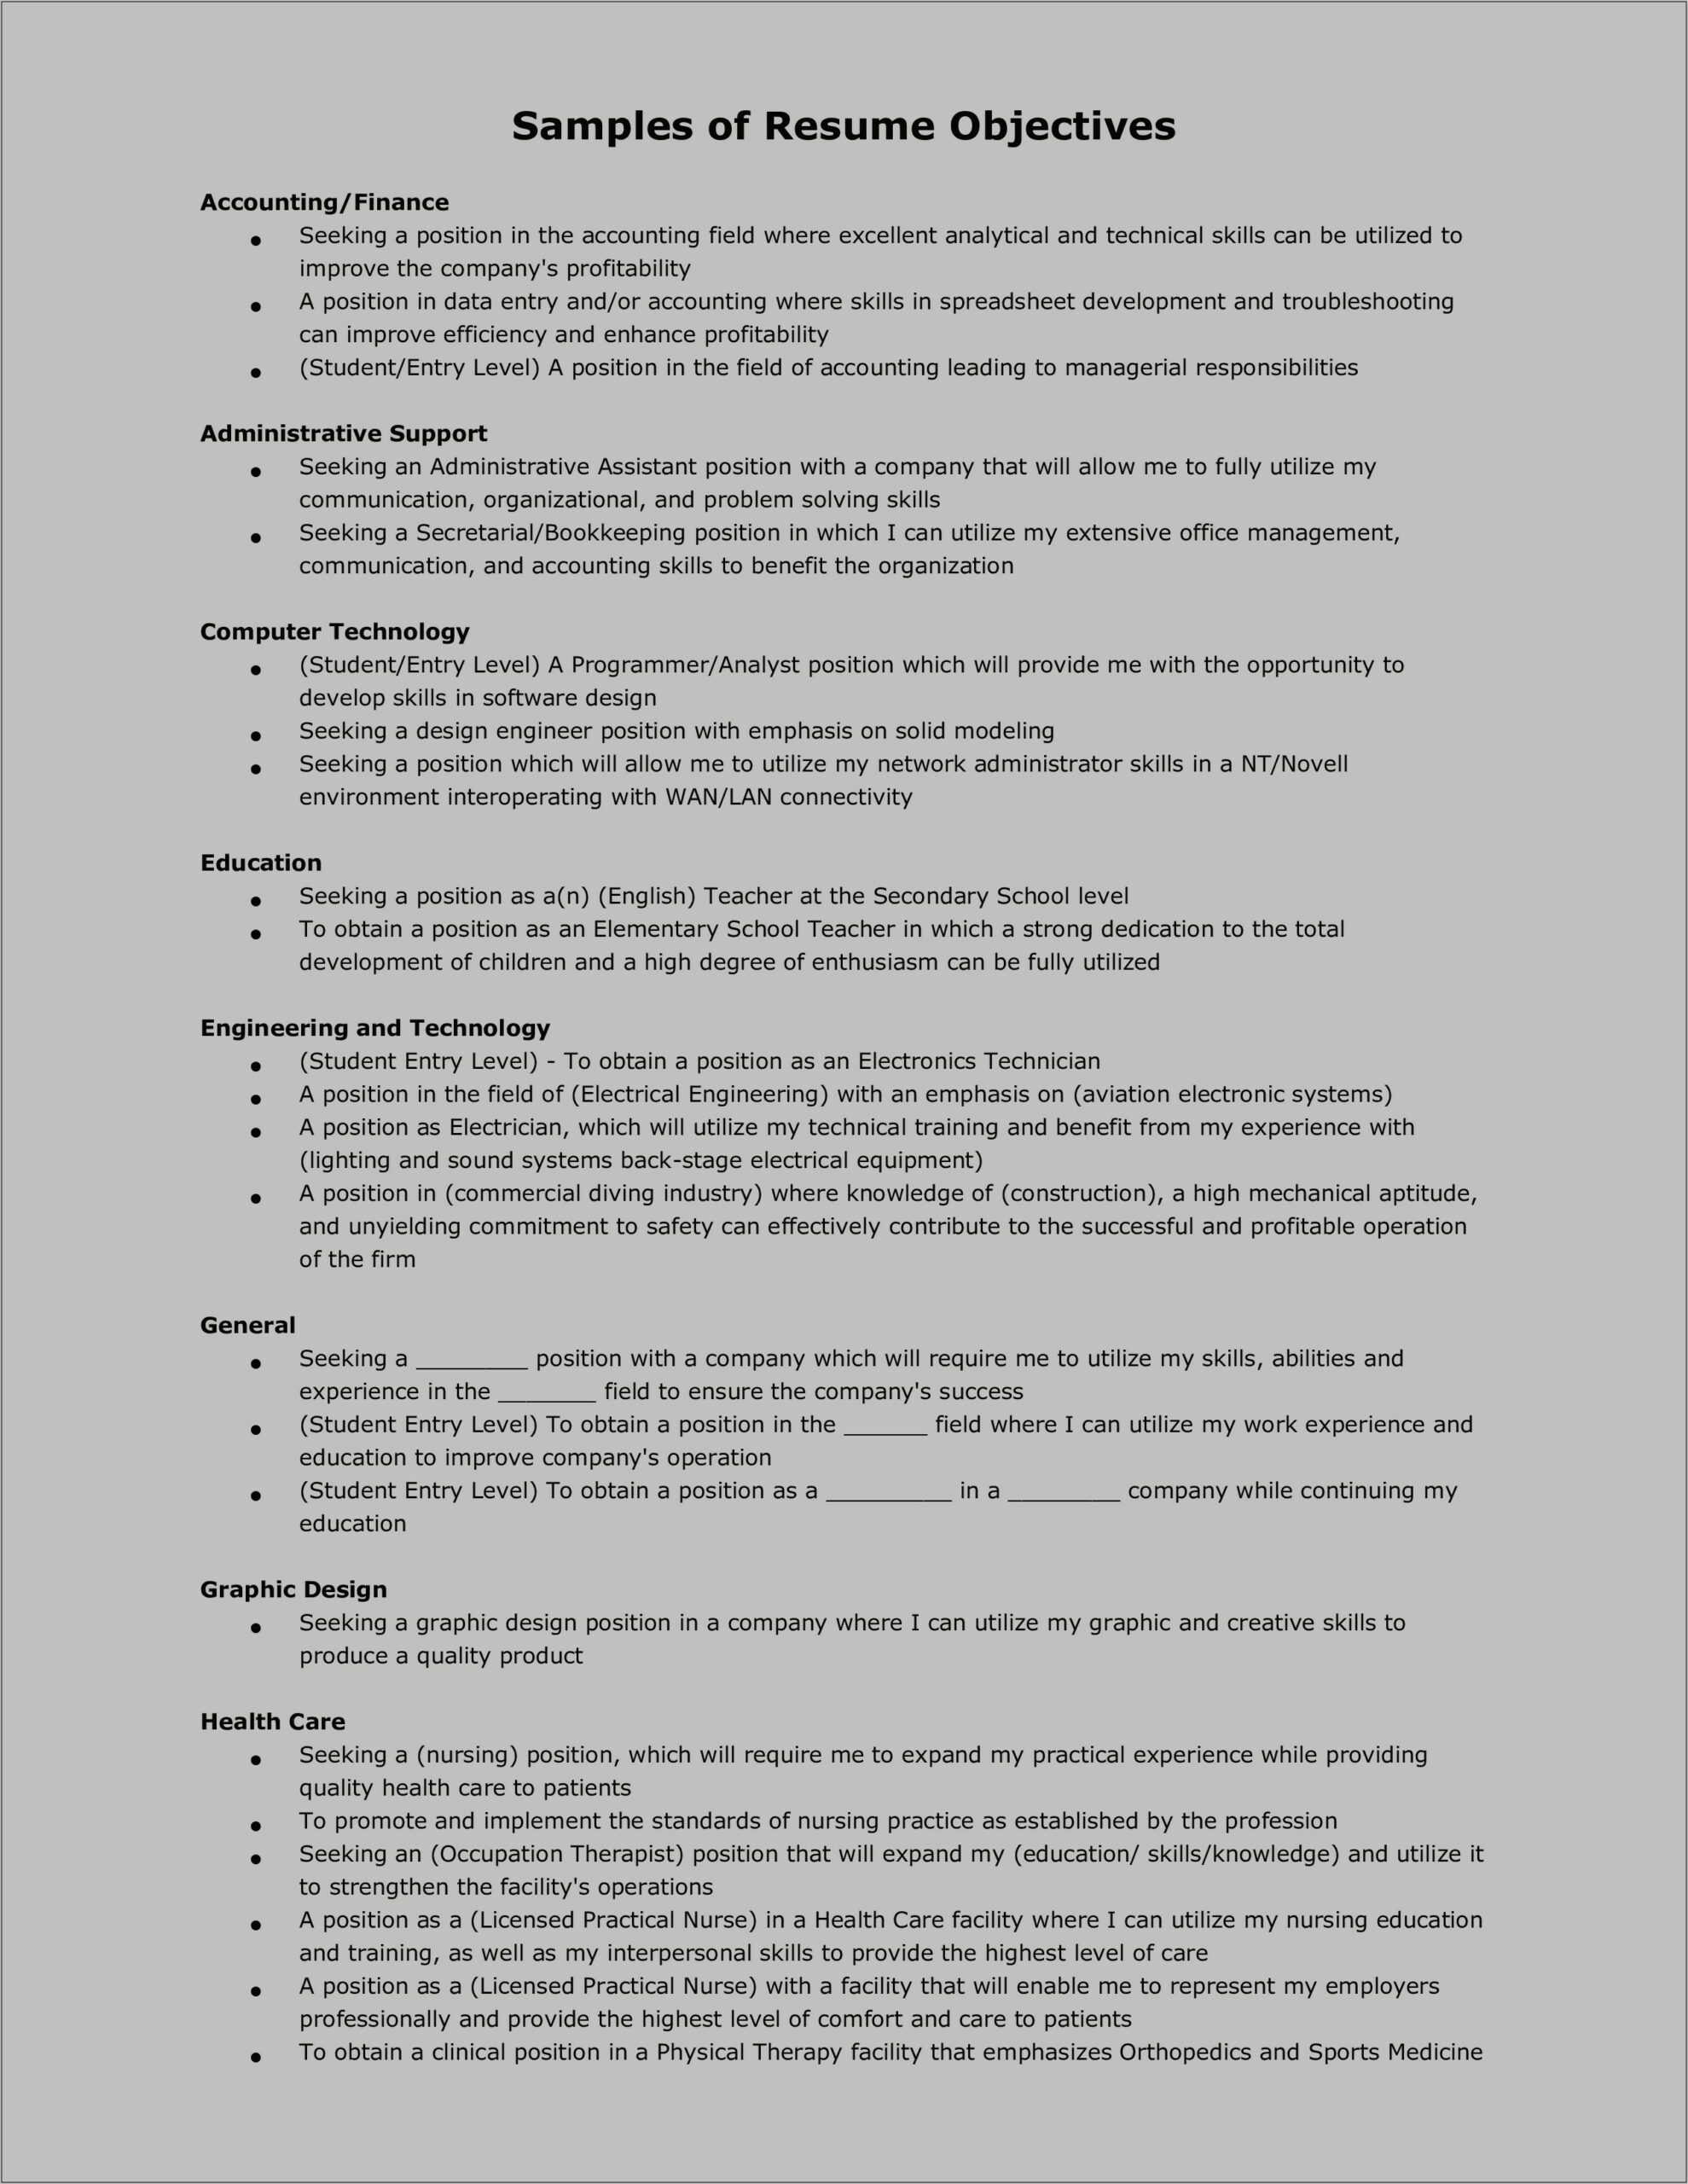 Sample Resume Objectives For Computer Programmer